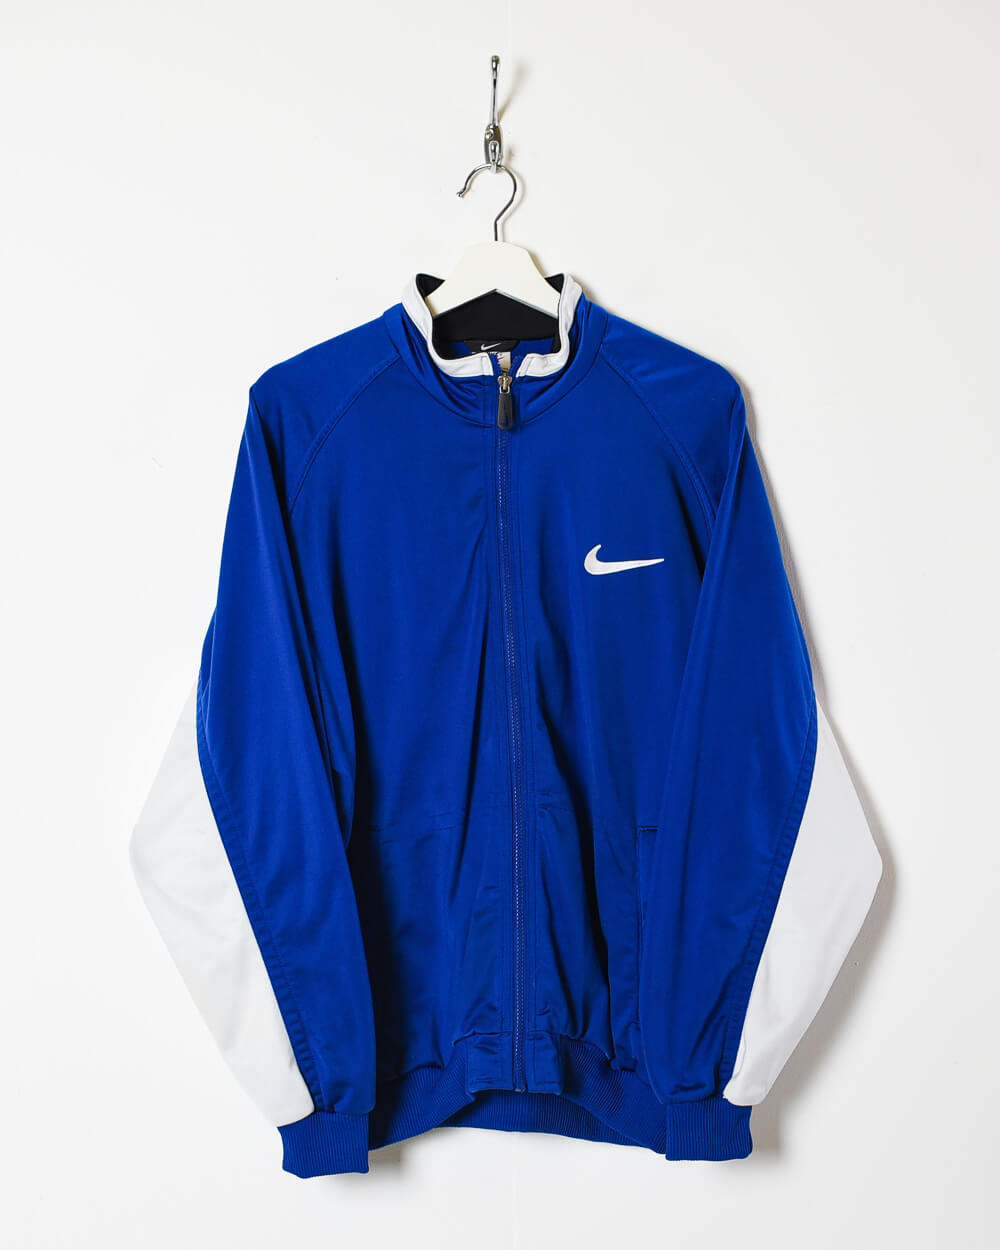 Blue Nike Tracksuit Top - Medium